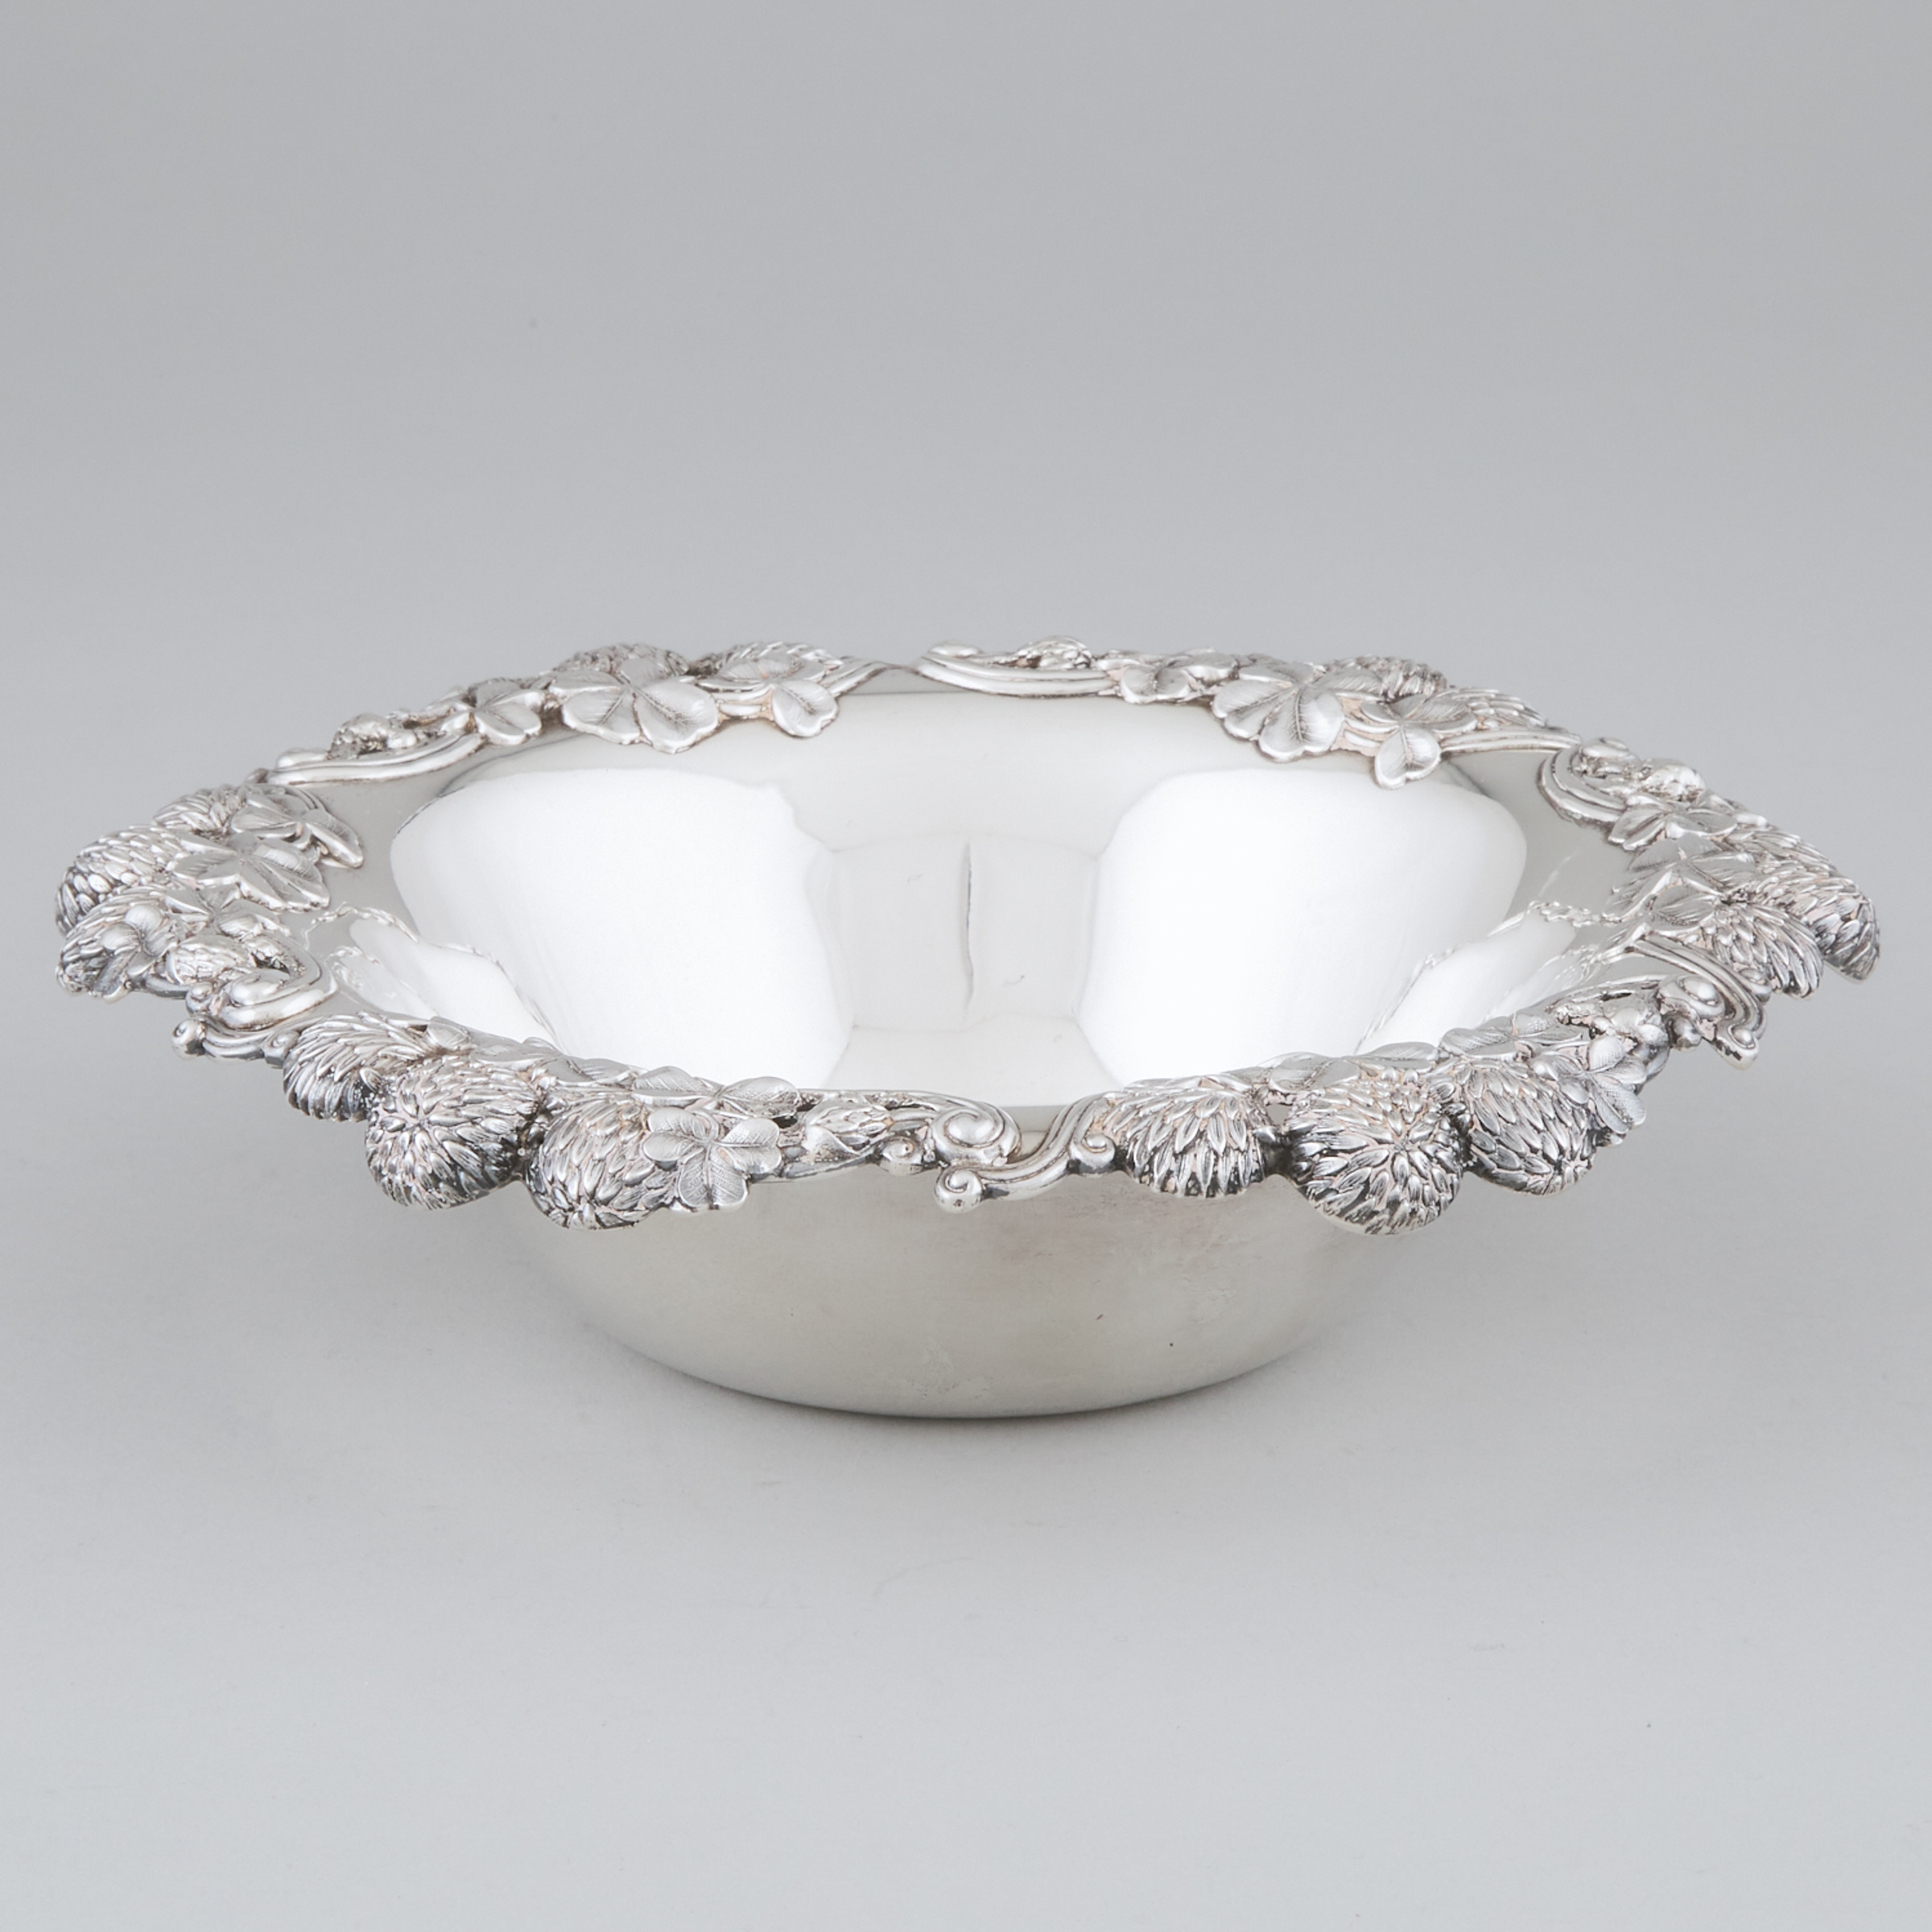 American Silver 'Chrysanthemum' Berry Bowl, Tiffany & Co., New York, N.Y., c.1891-1902